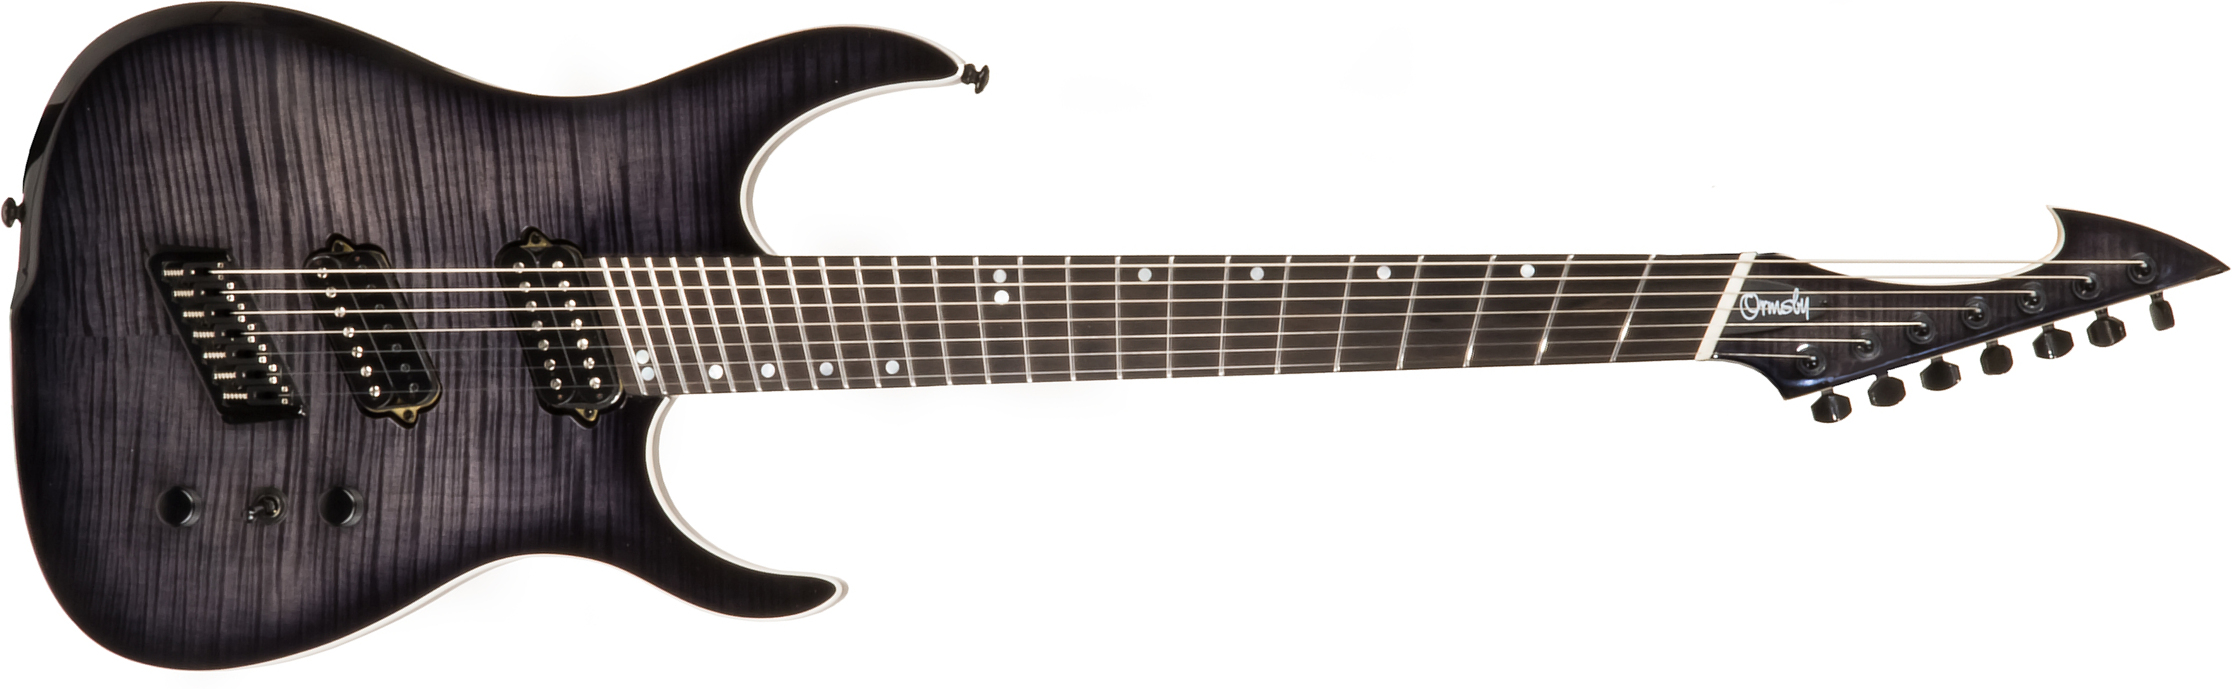 Ormsby Hype Gtr 7 Swamp Ash Flame Maple Hh Ht Eb - Dahlia Black - Multi-Scale Guitar - Main picture